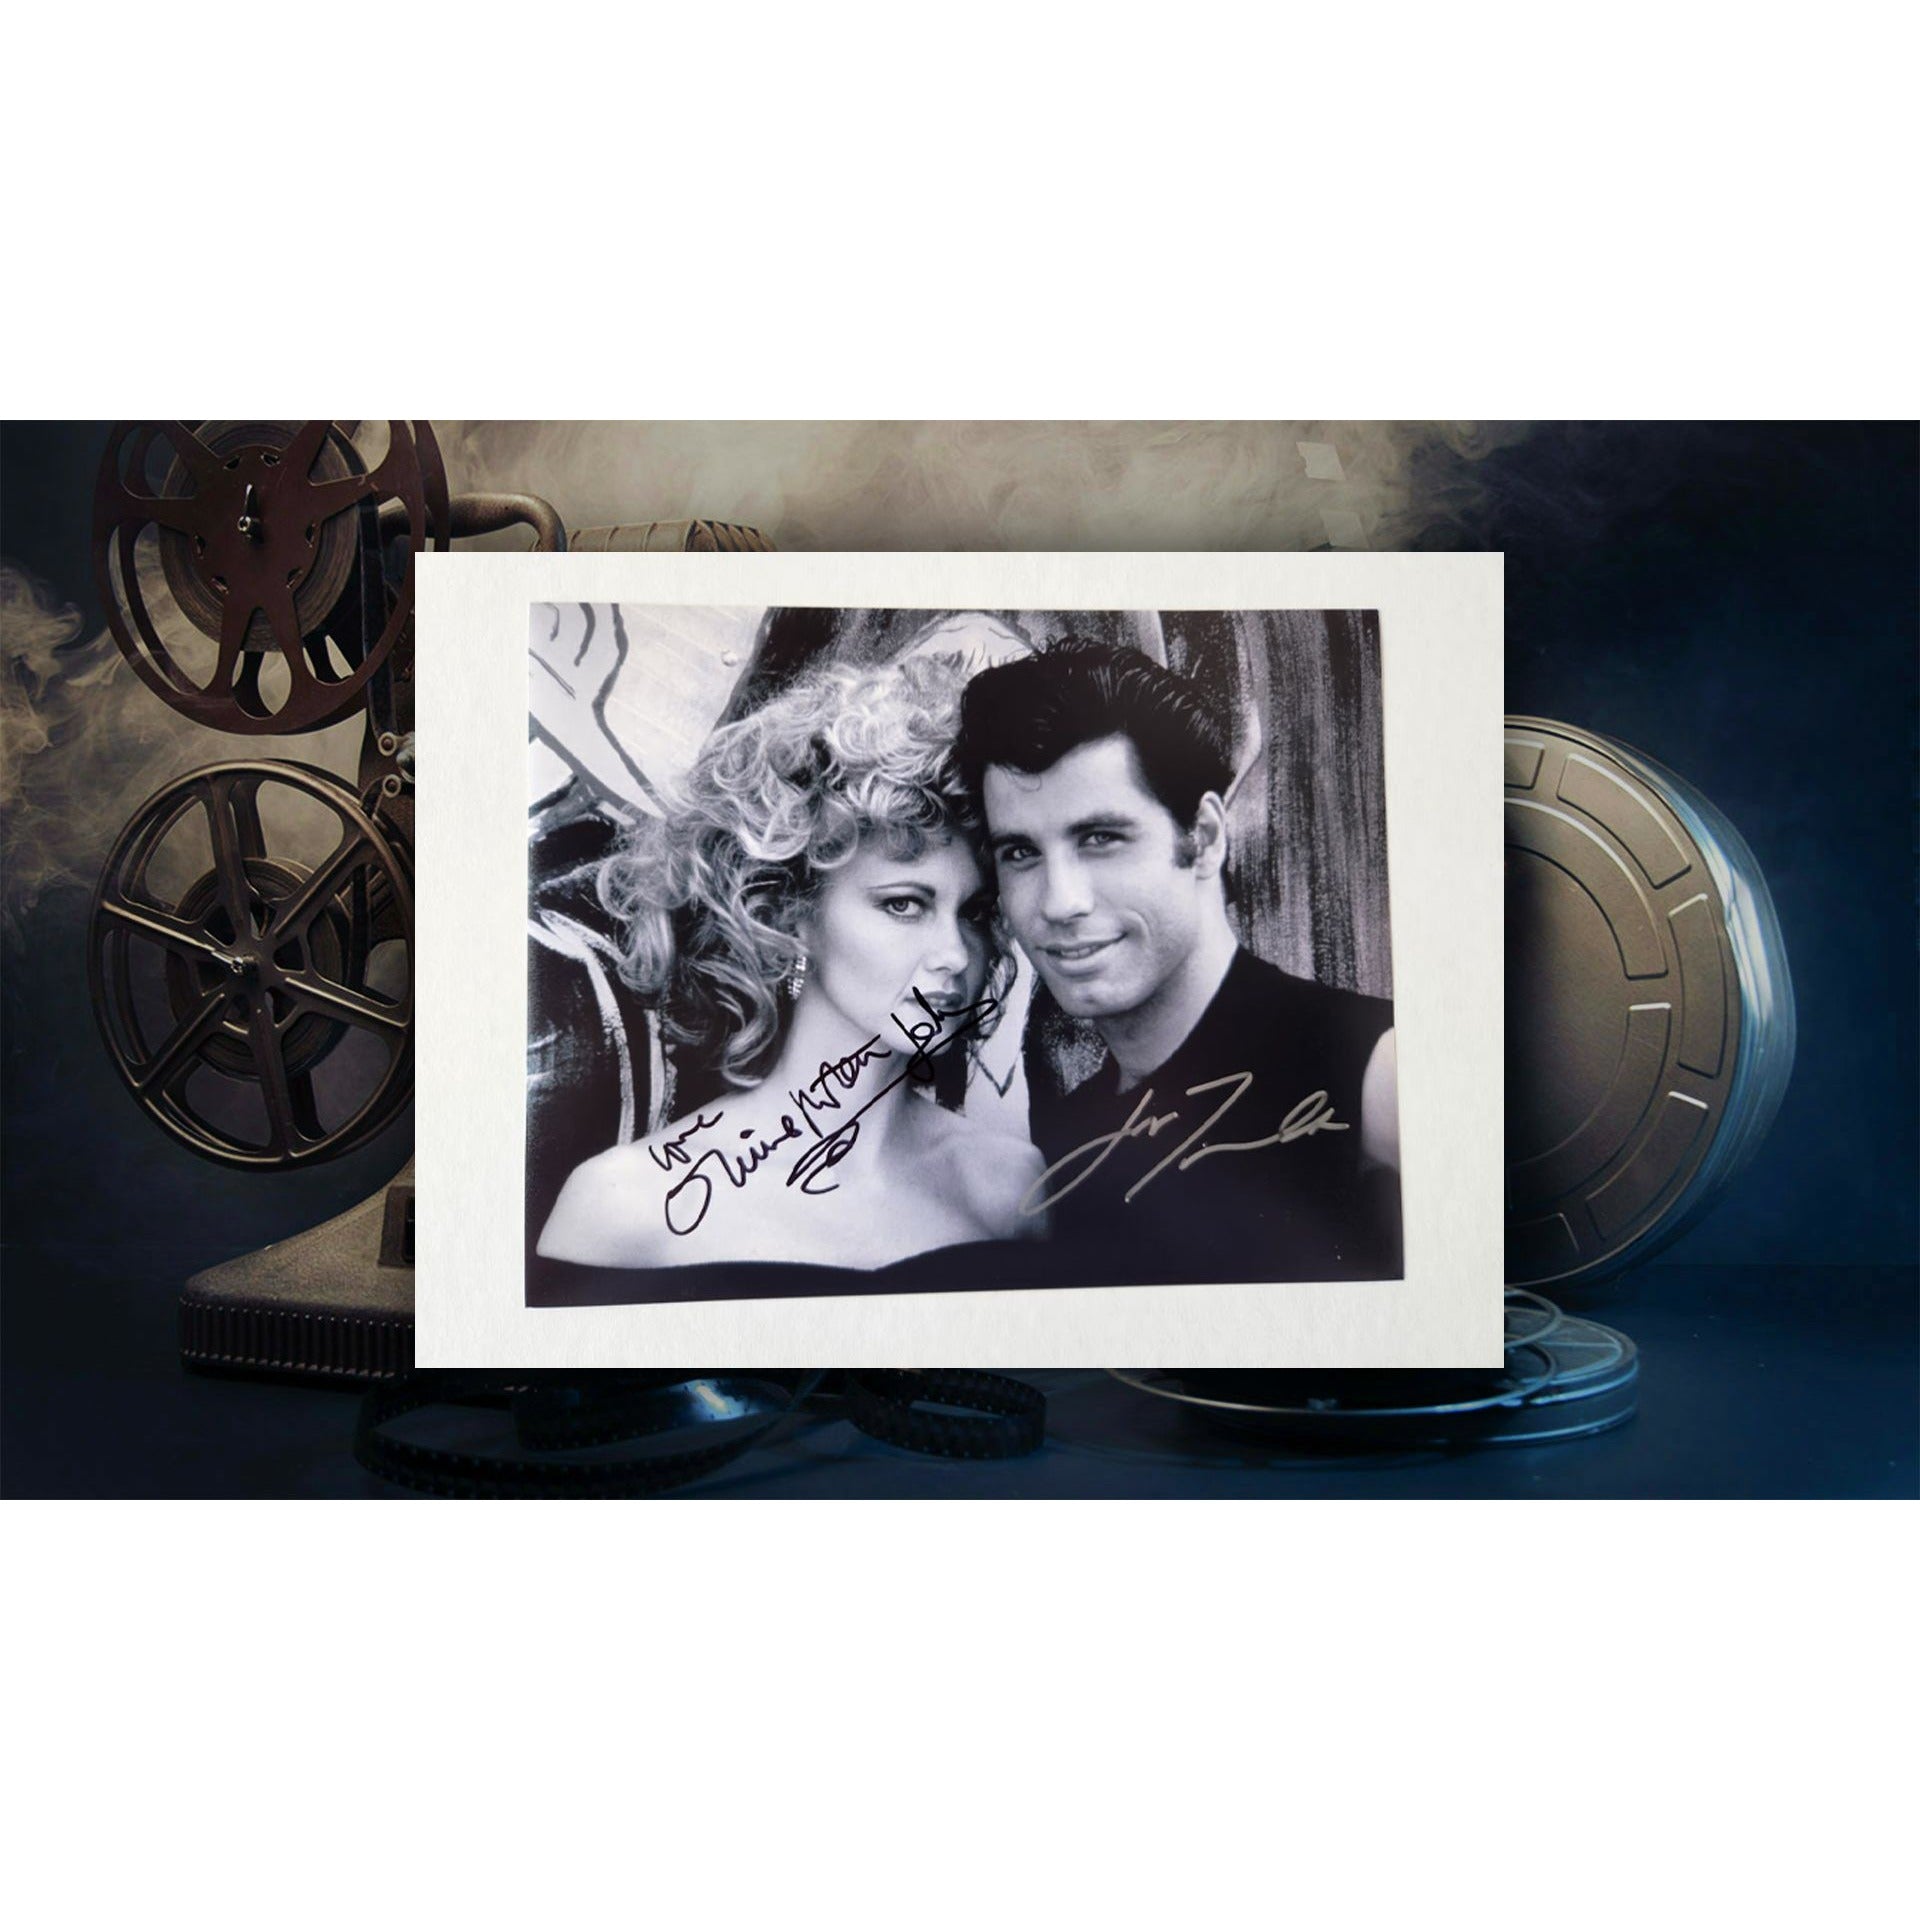 Greece Olivia Newton-John and John Travolta 8x10 photo signed with proof